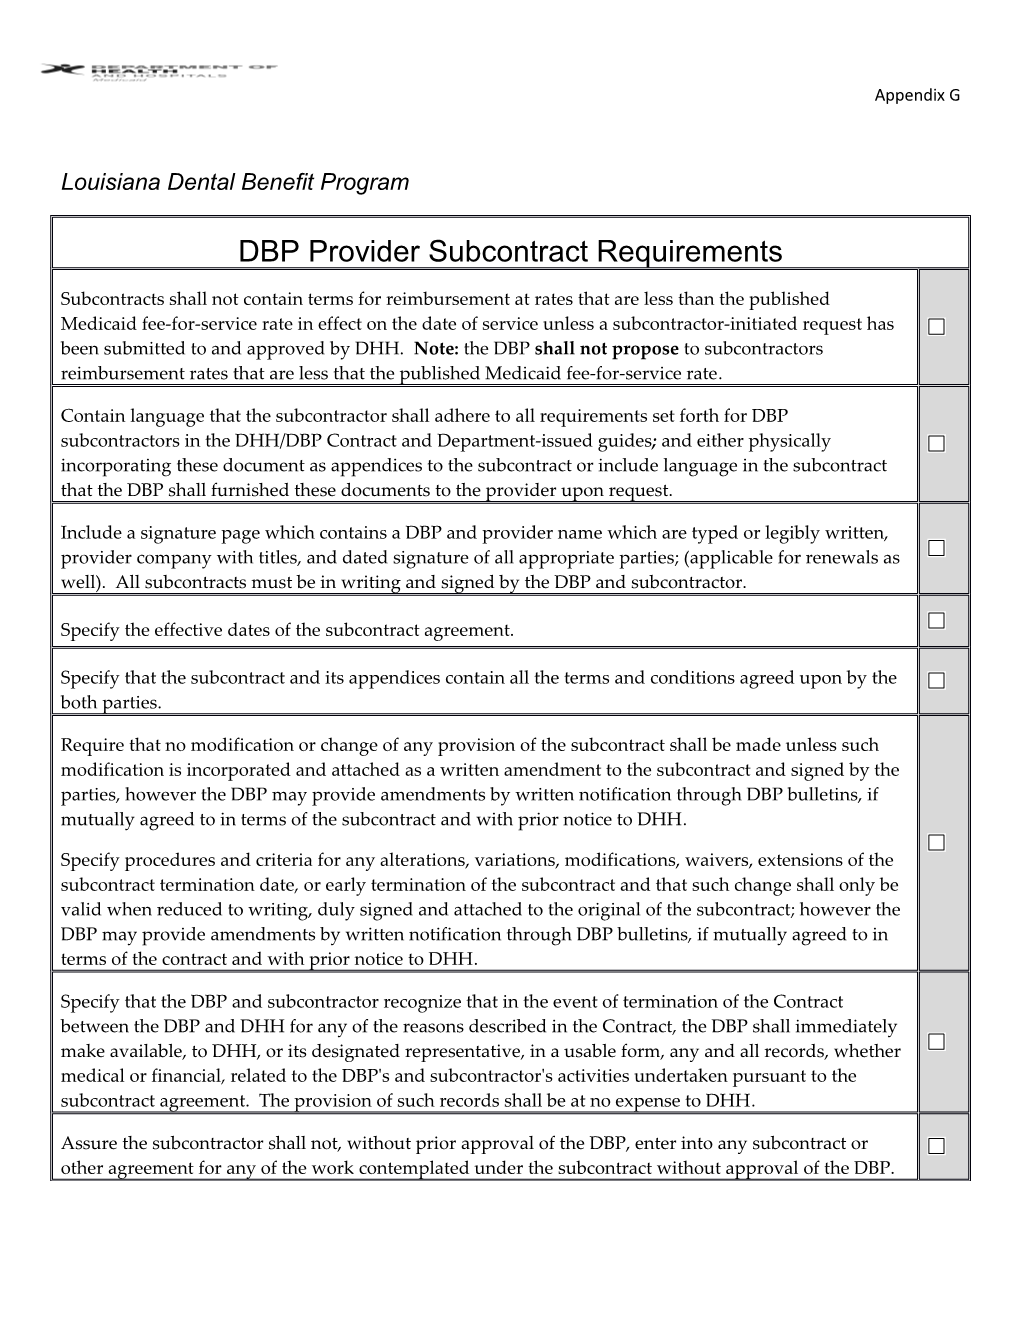 Louisiana Dental Benefit Program